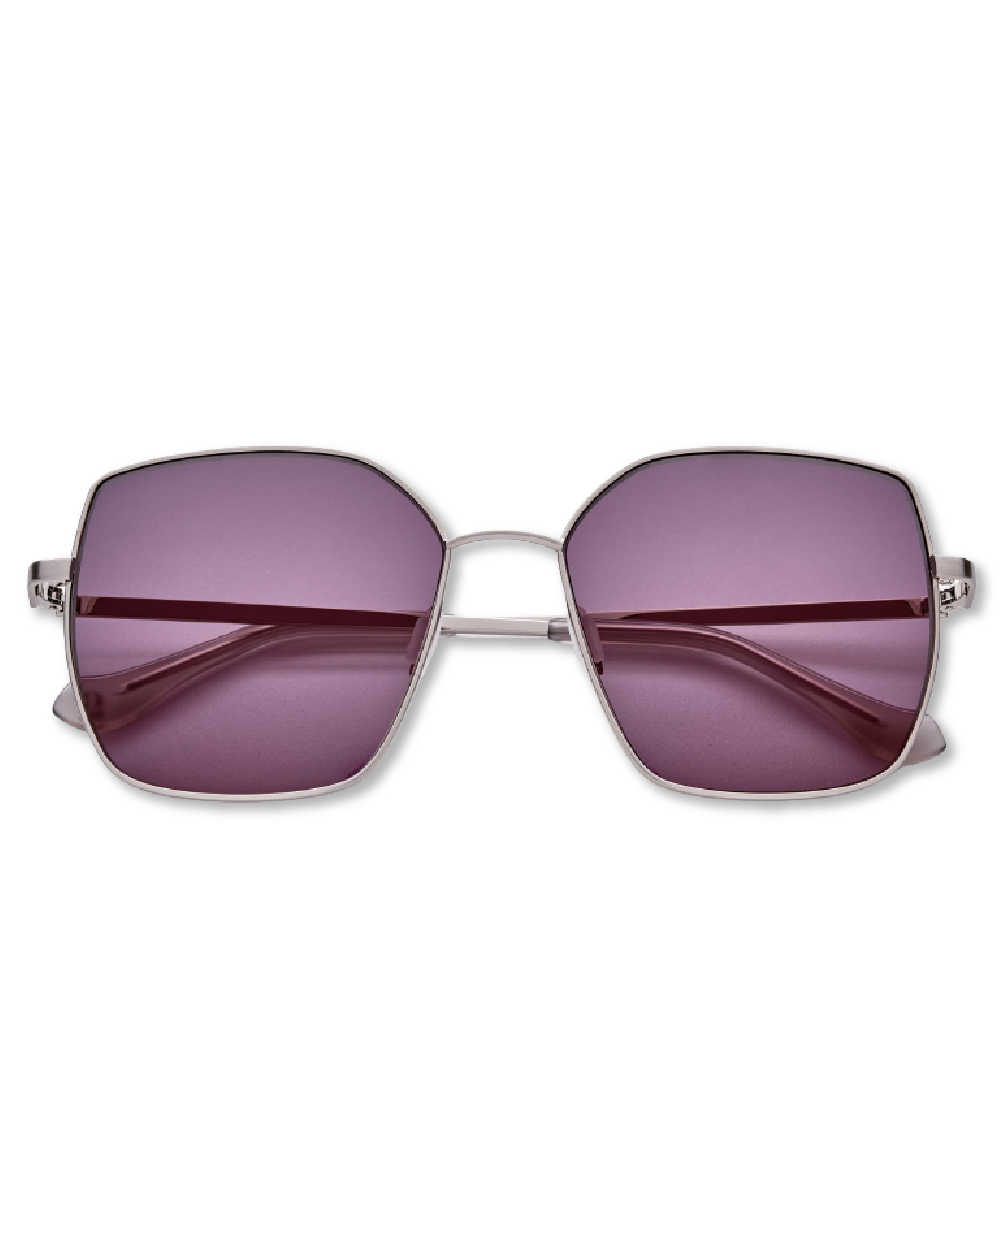 Chanel Pearl Chain Round Sunglasses Burgundy 4245 c108/3M